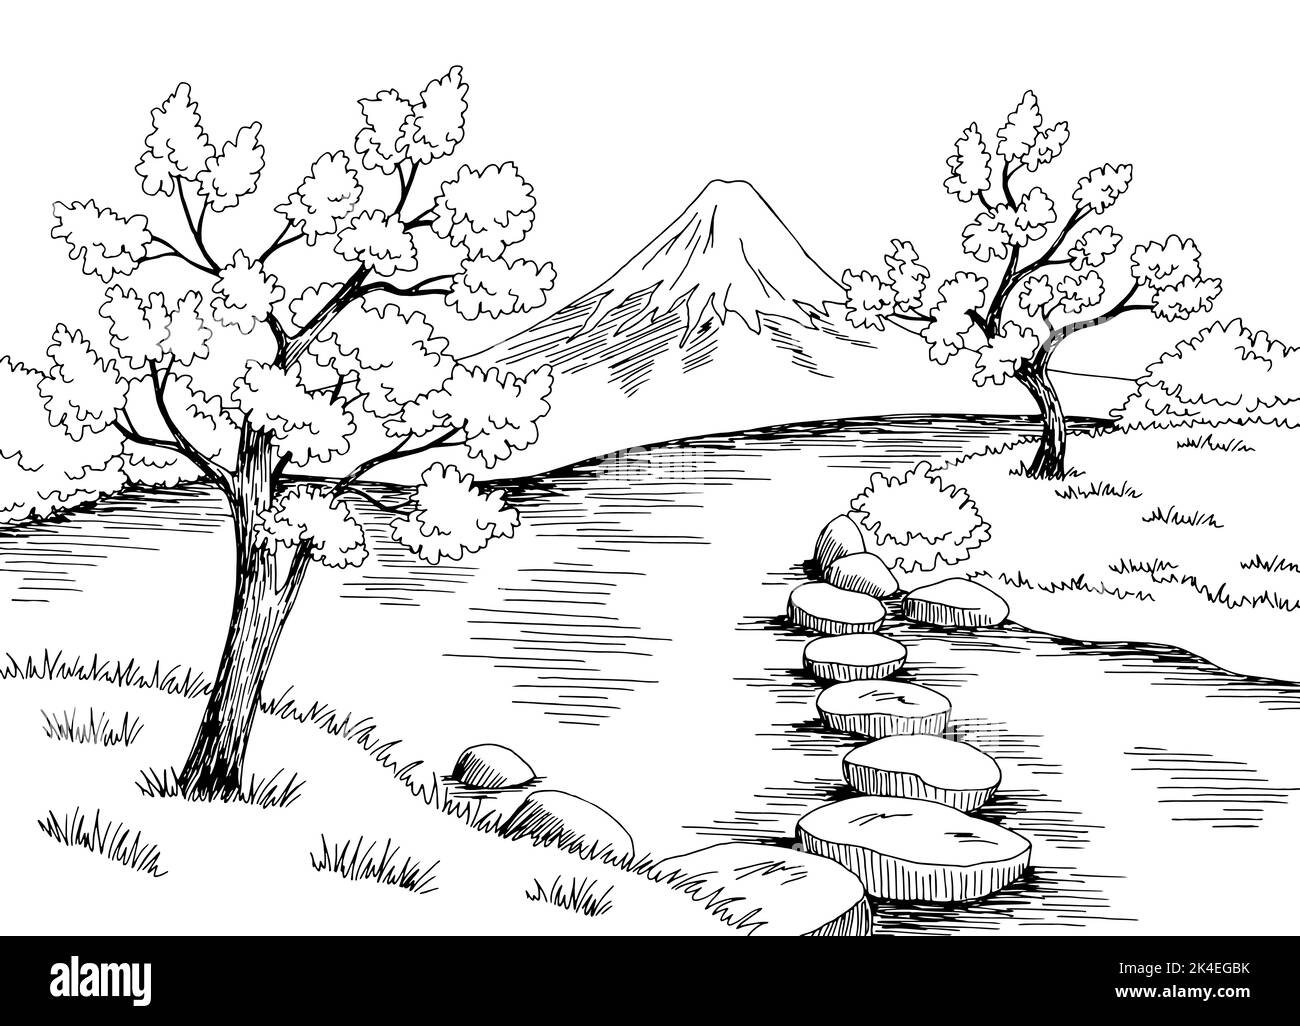 Japan Garten See Grafik schwarz weiß Landschaft Skizze Illustration Vektor Stock Vektor